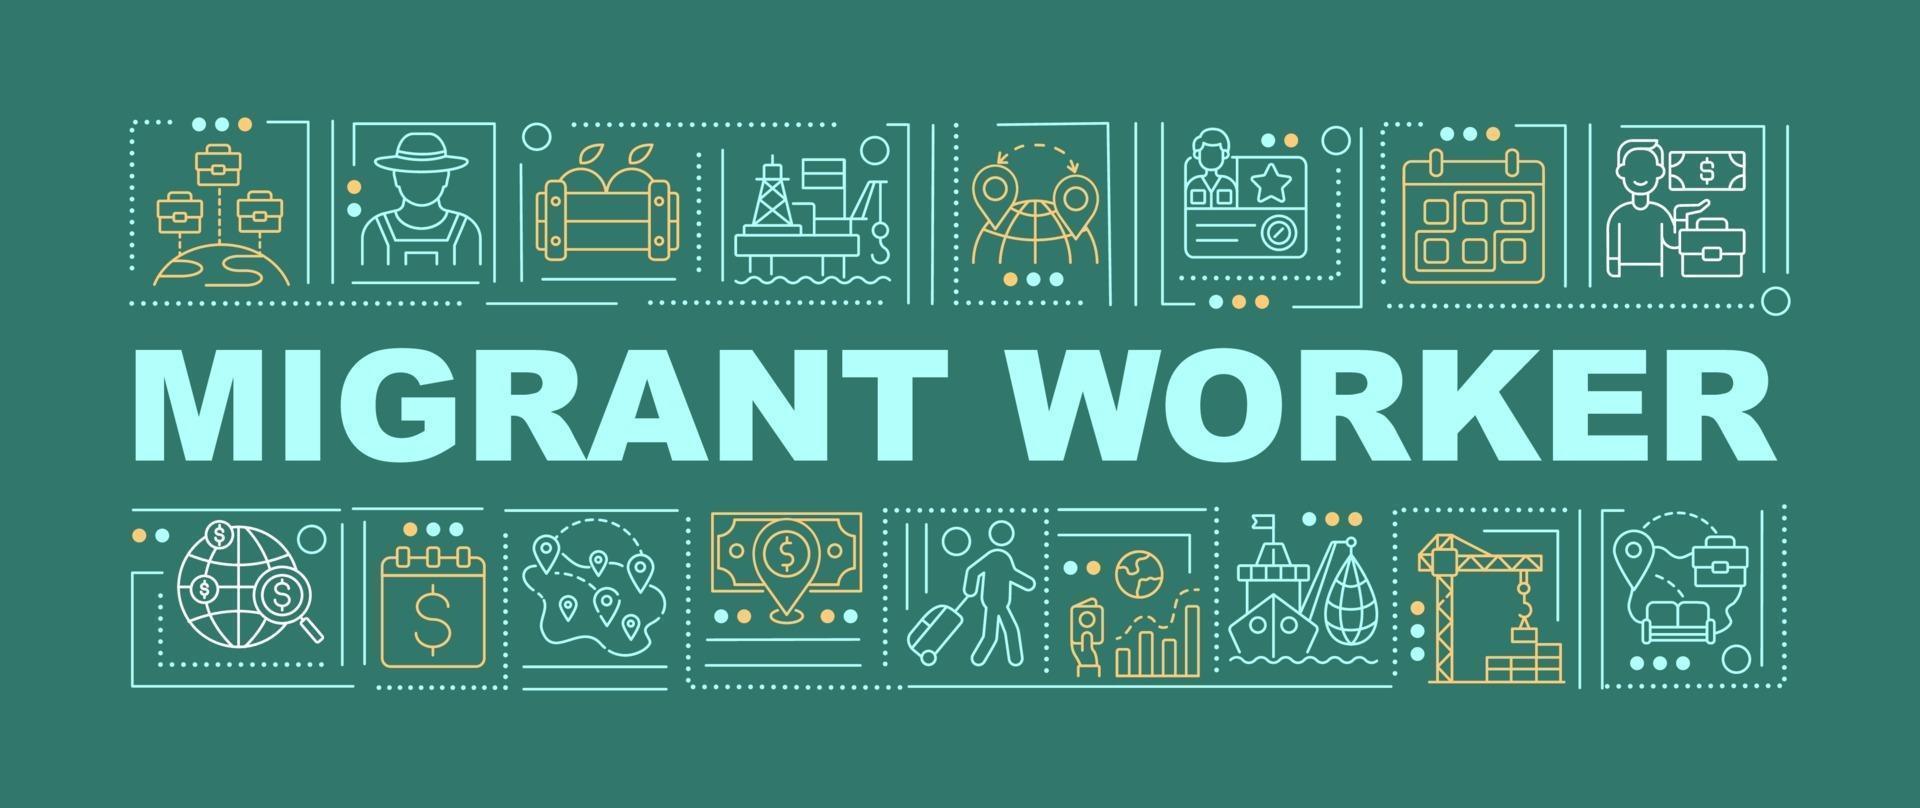 Migrant worker word concepts banner vector